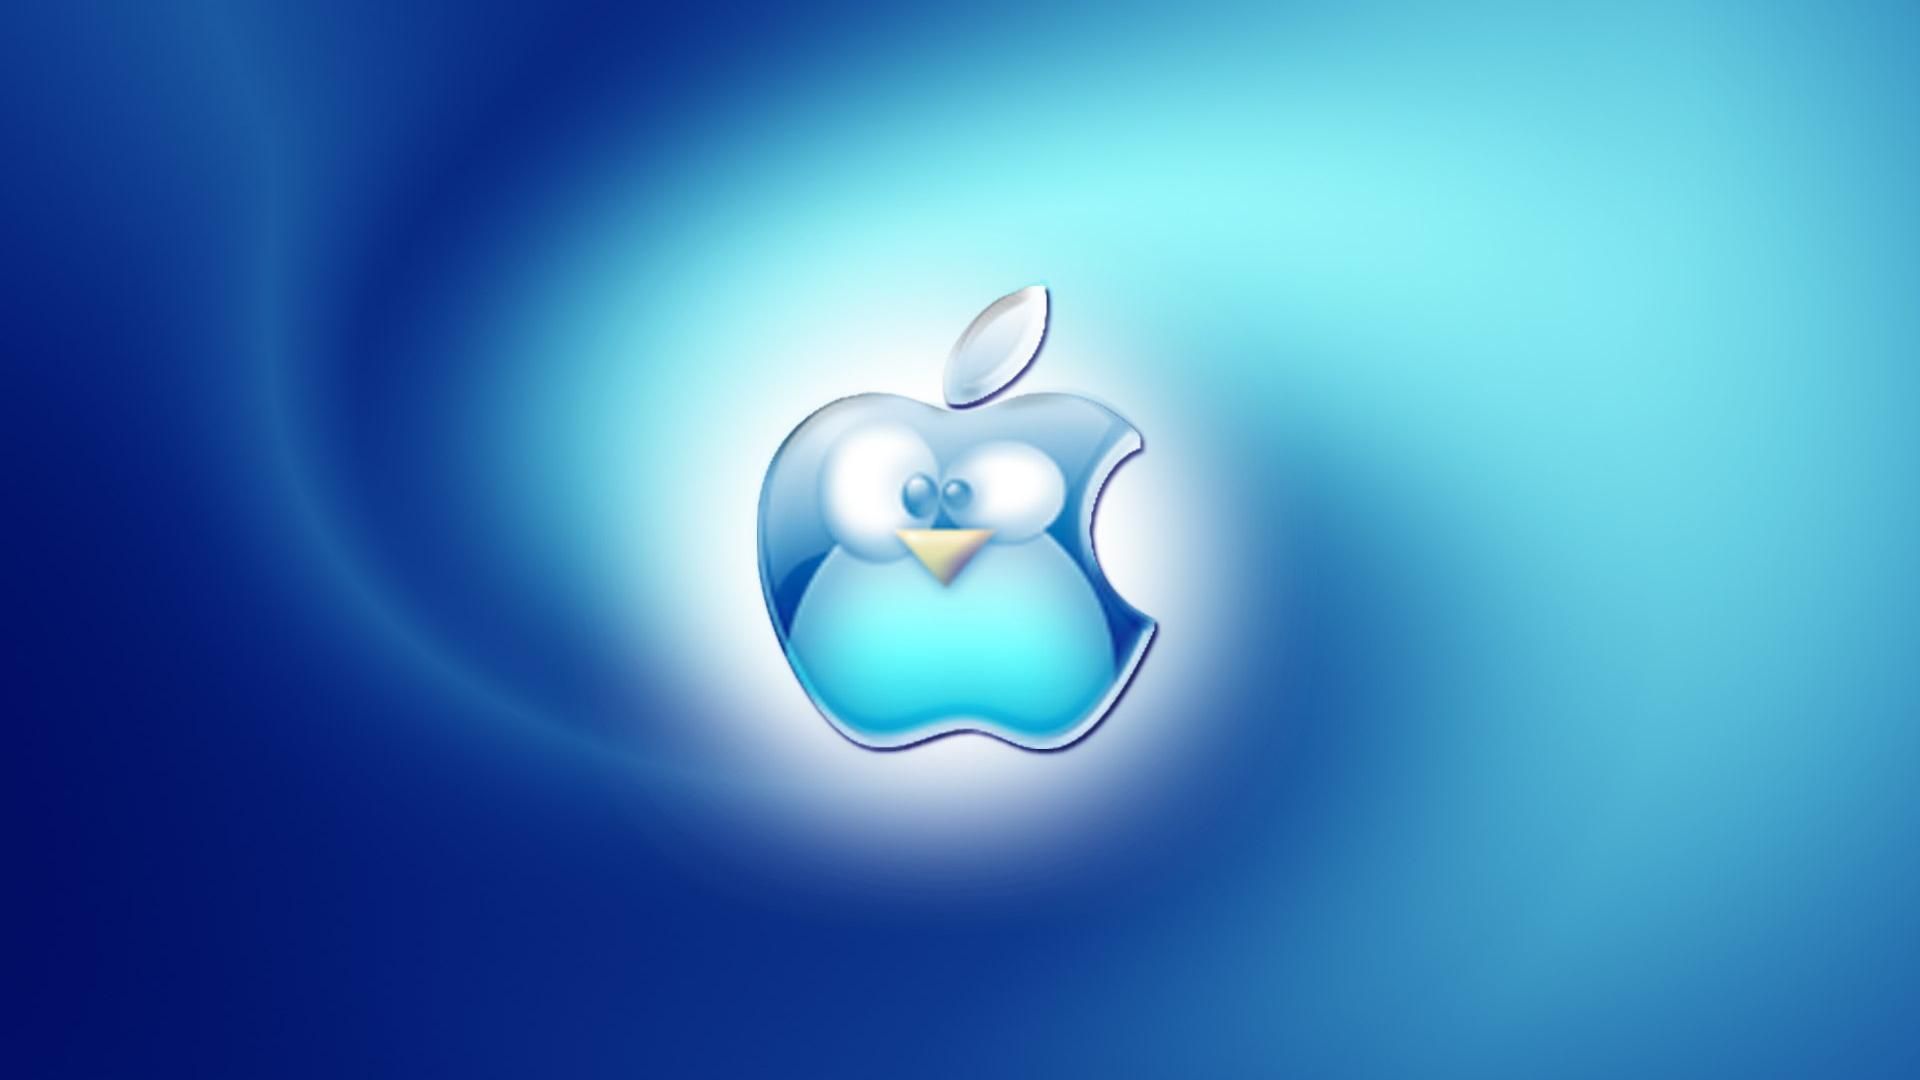 tux swirl saw apple inc hd wallpaper - (#20797) - HQ Desktop ...